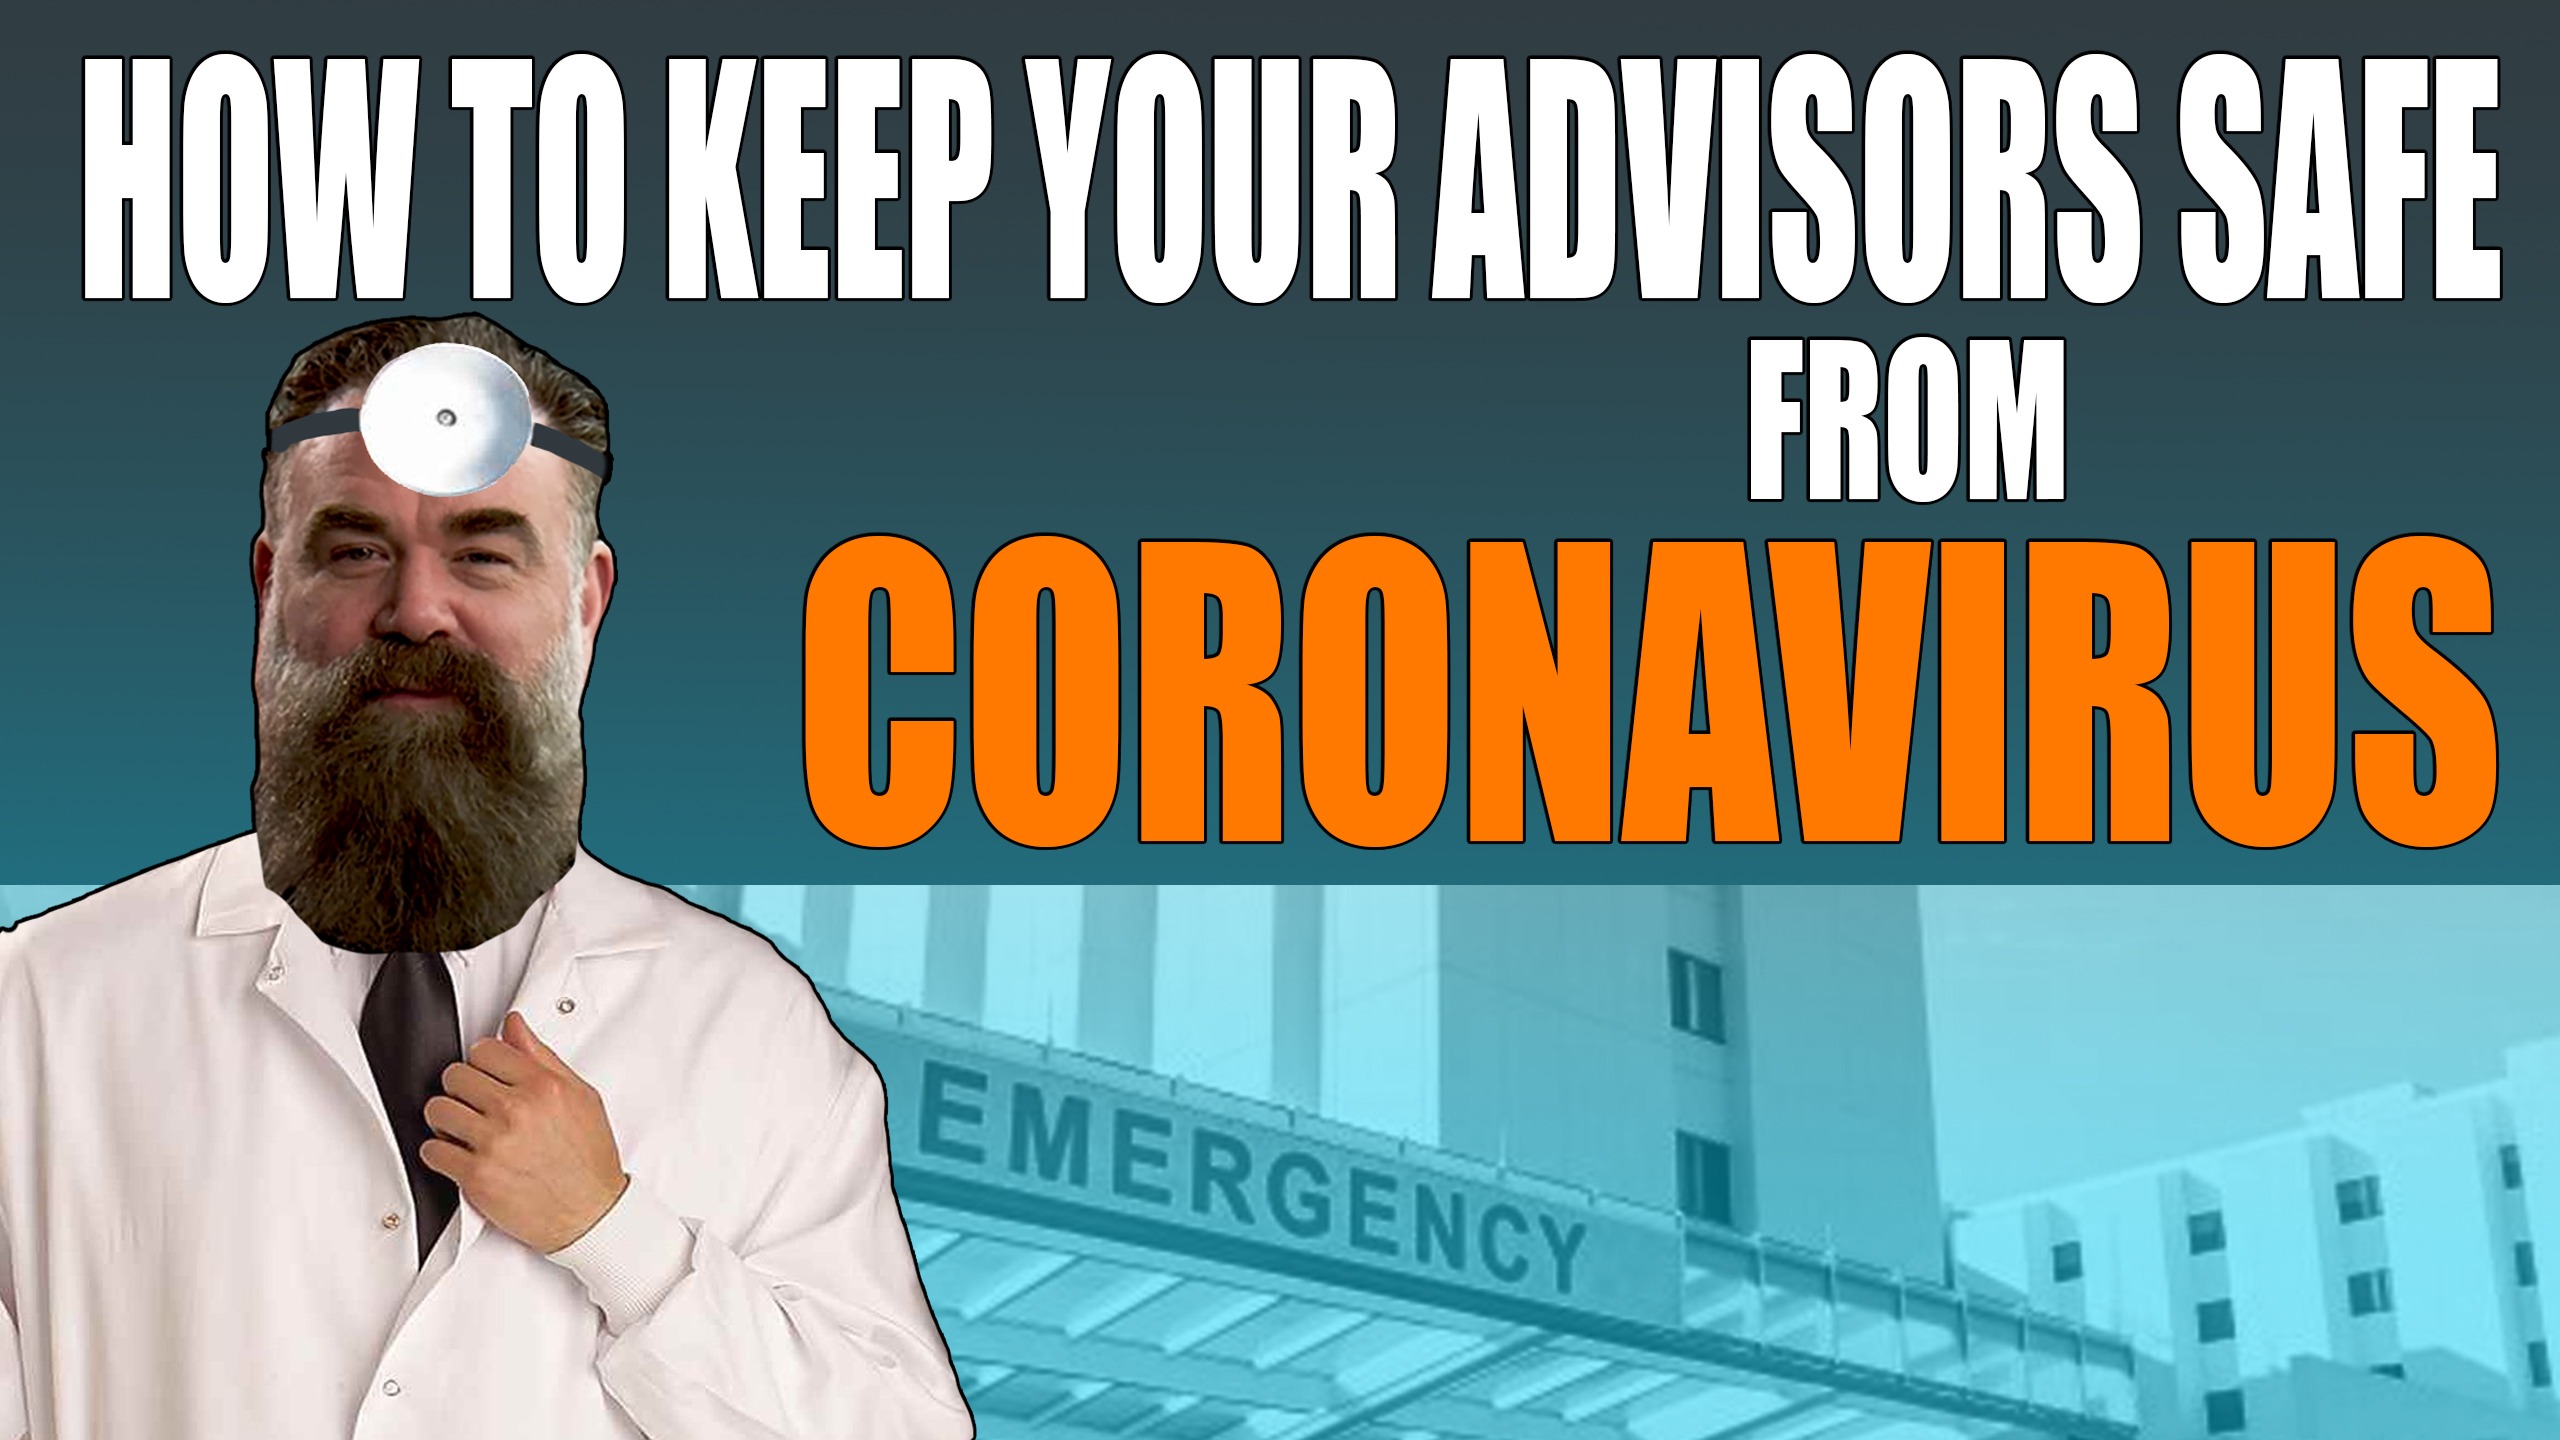 how to keep service advisors safe from coronavirus